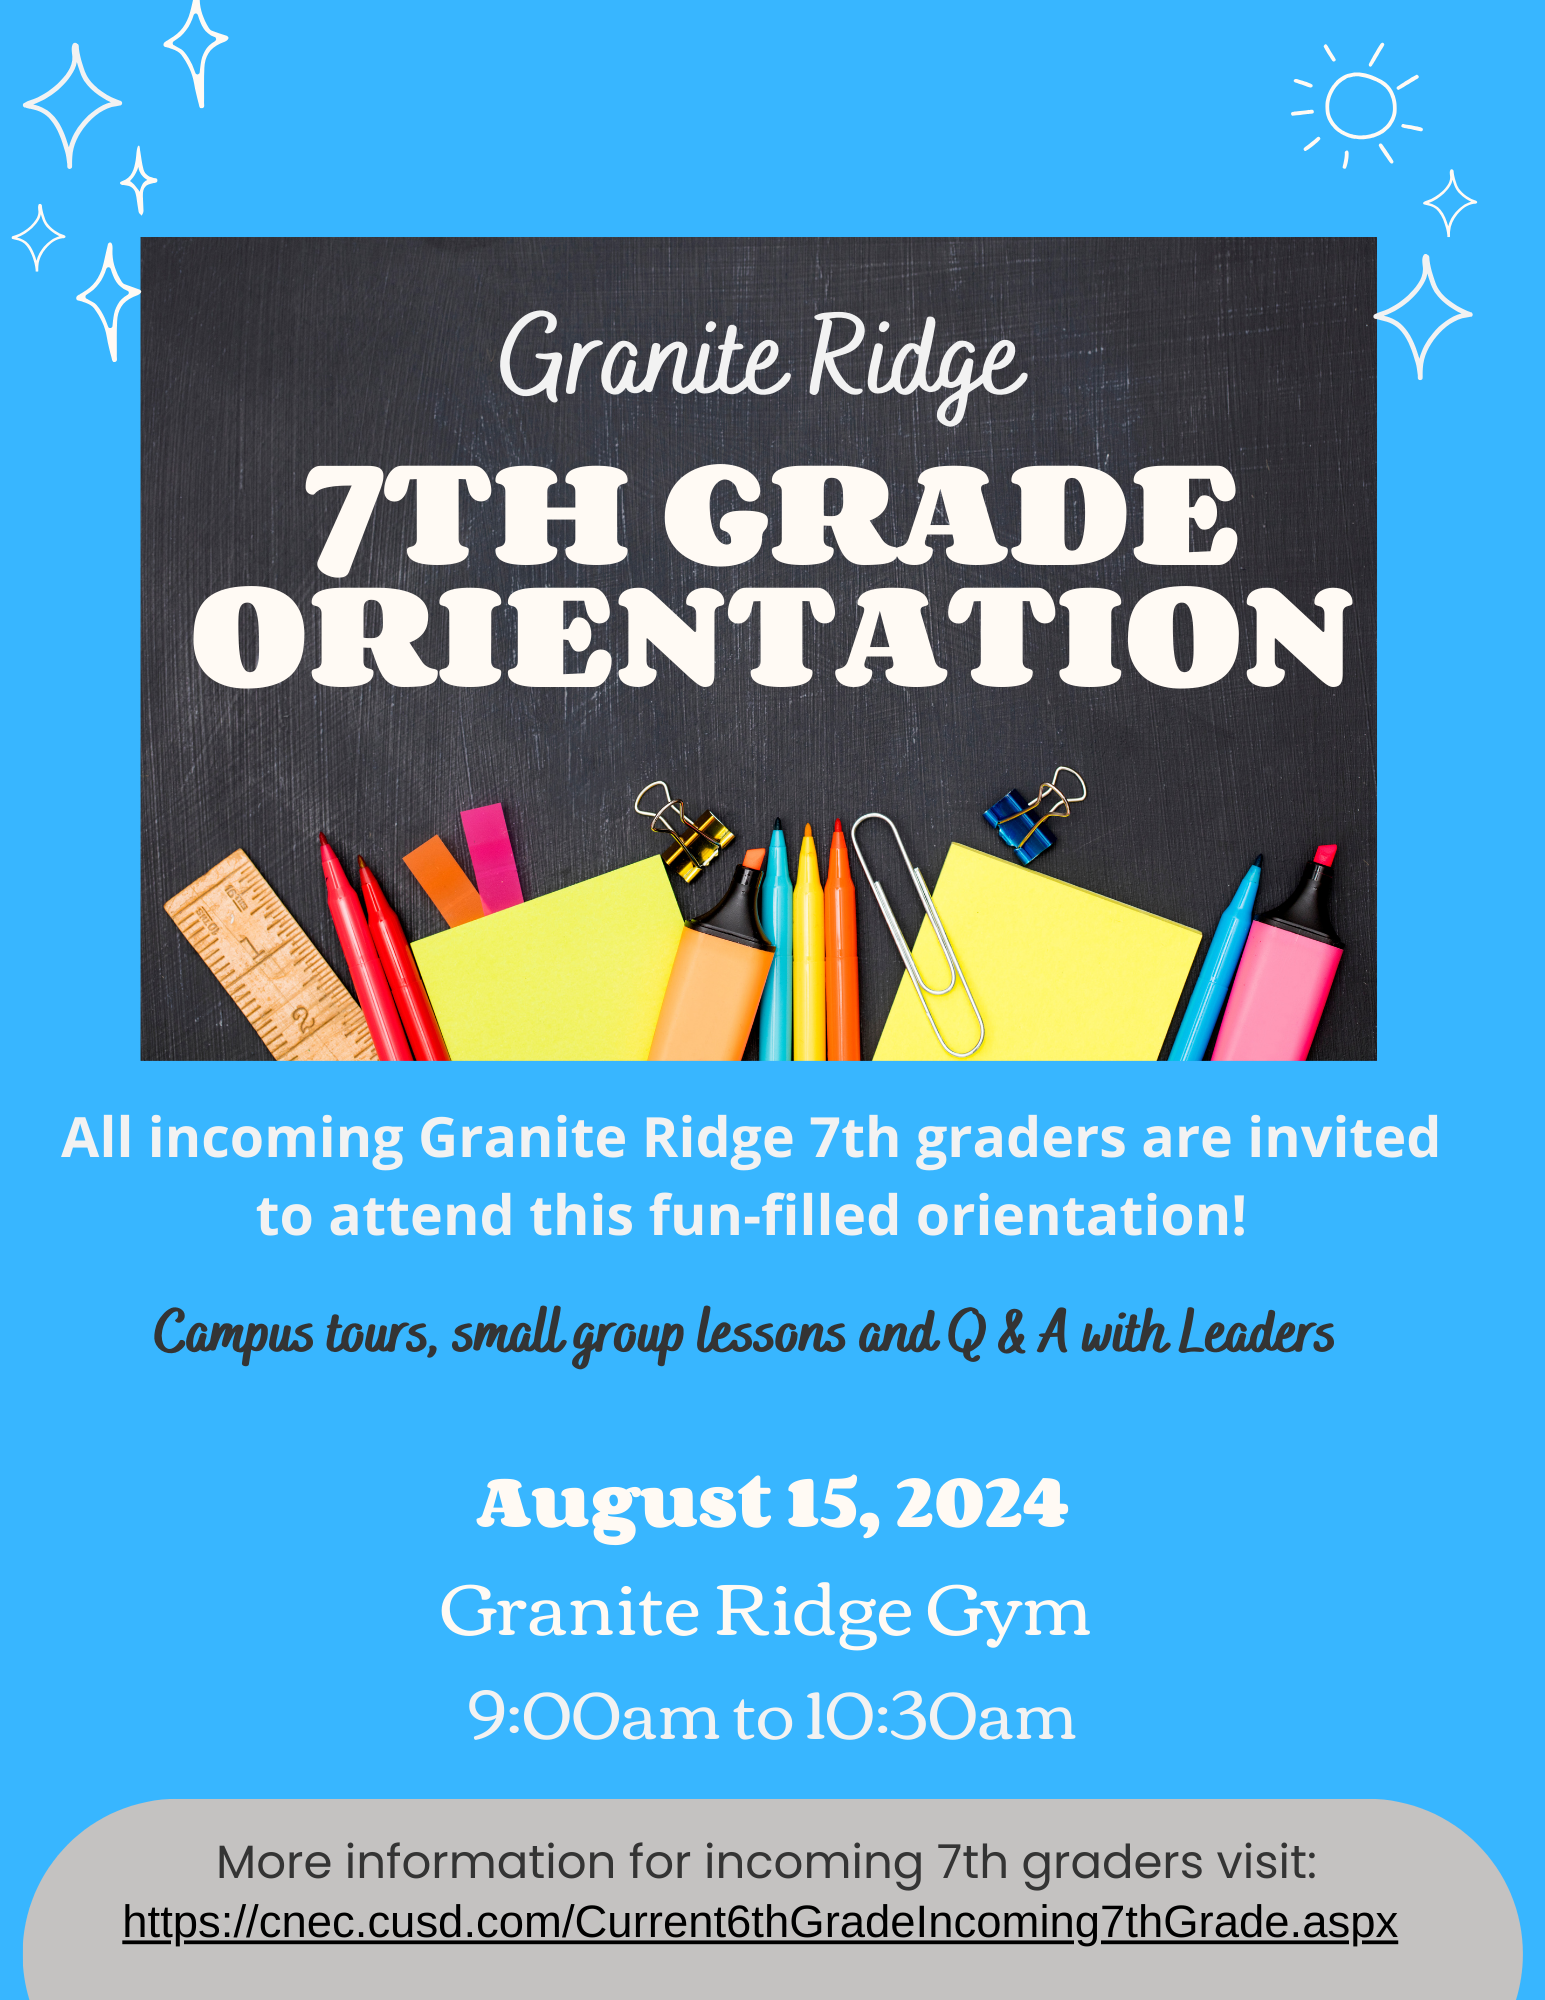 7th grade orientation